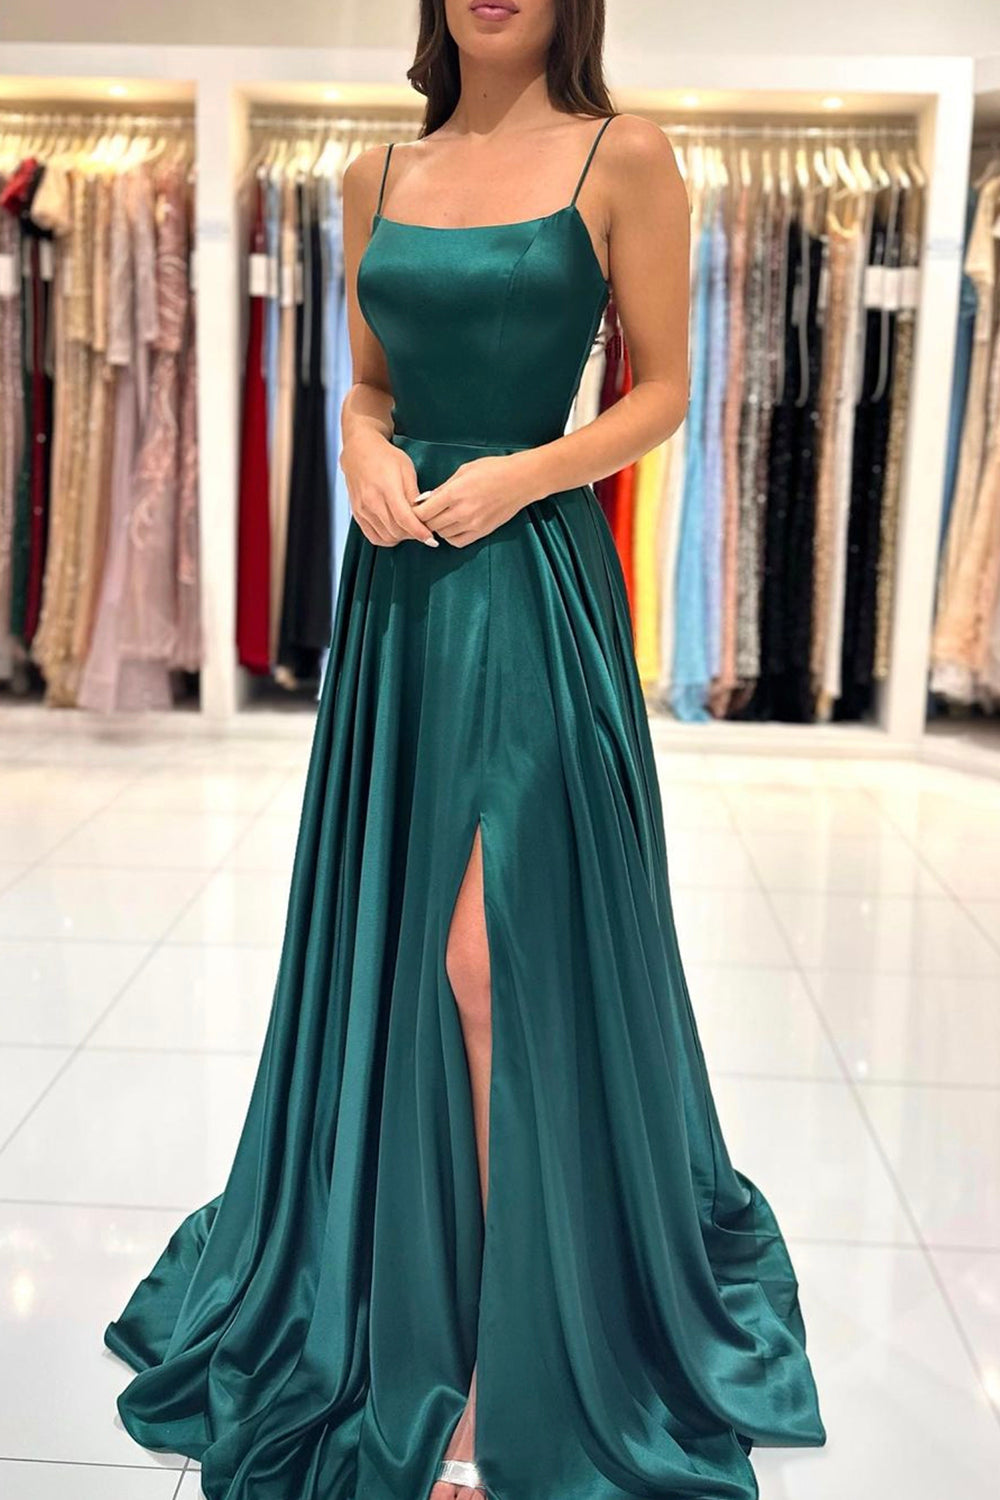 Green Satin Long Prom Dress, Simple A-Line Evening Dress